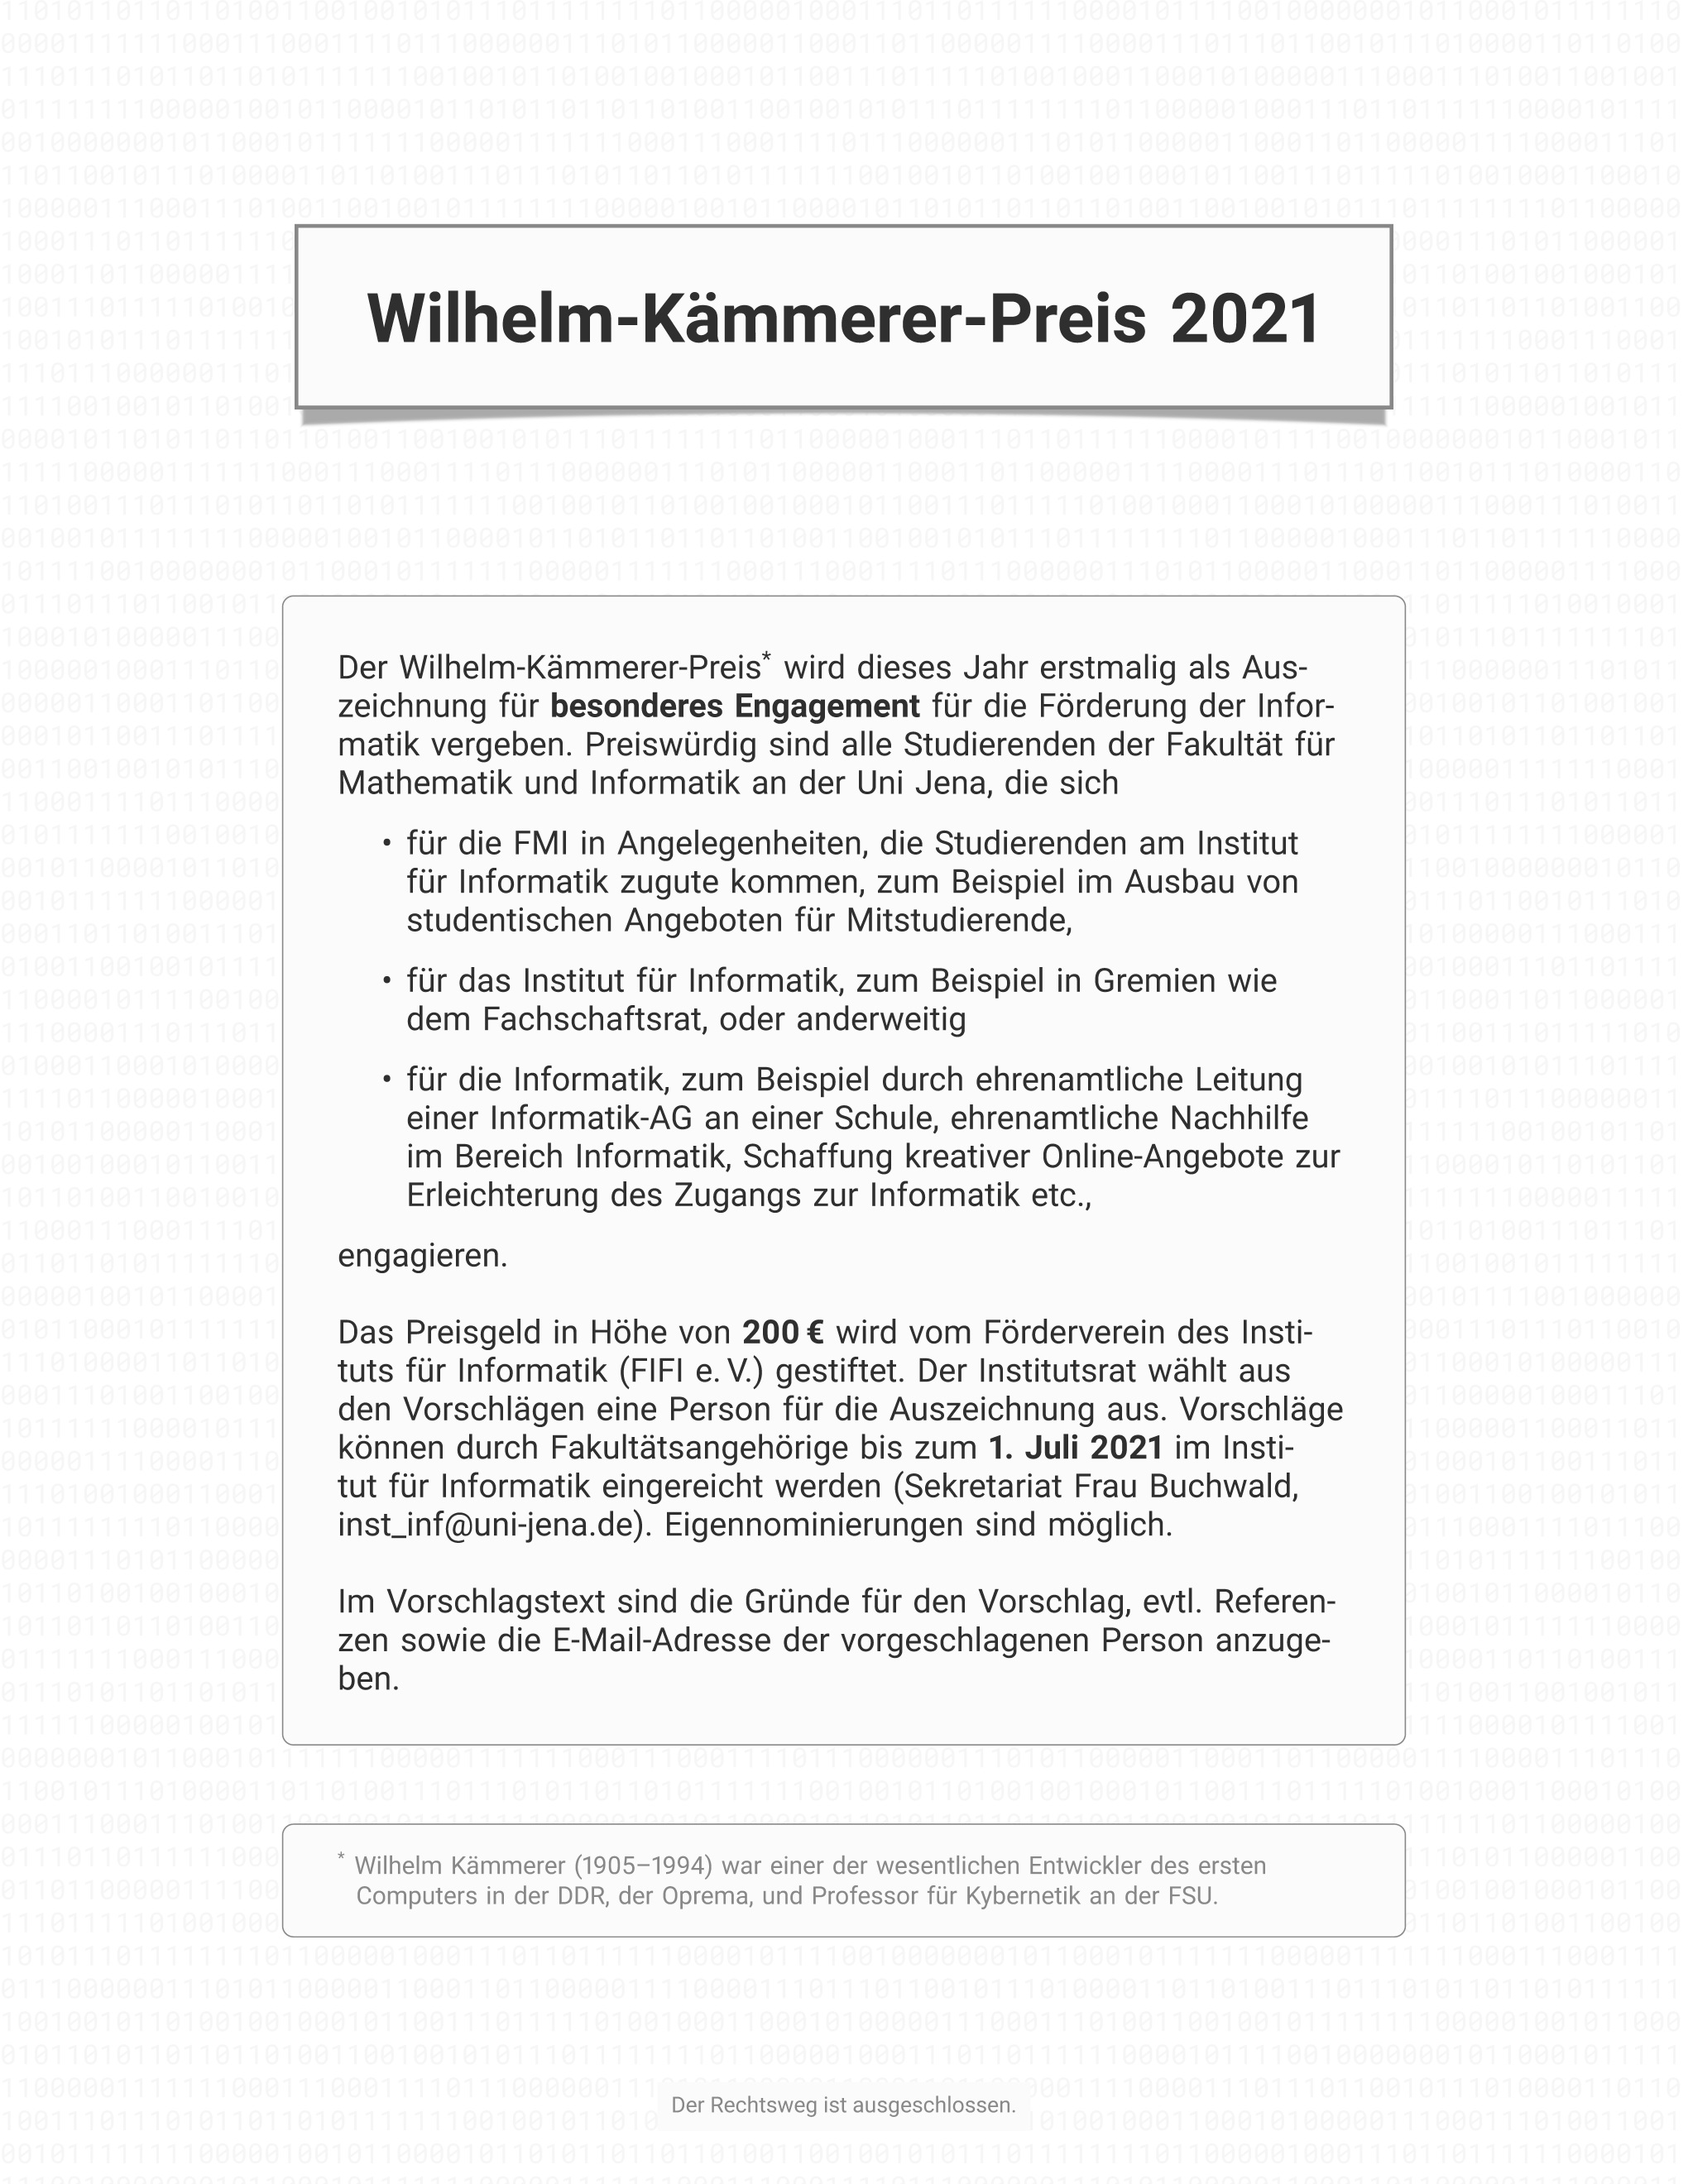 Wilhelm-Kämmerer-Preis